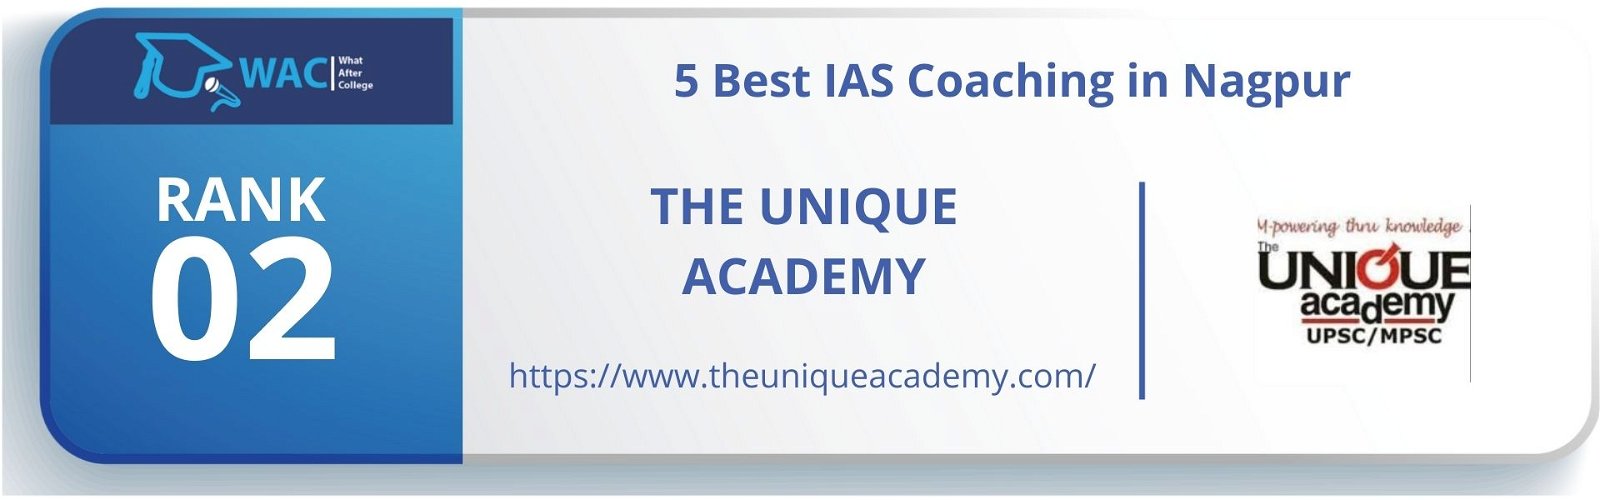 5 Best IAS Coaching in Kanpur Rank 3: Dhyeya IAS Coaching IN Kanpur Rank 3: Dhyeya IAS Coaching in Kanpur